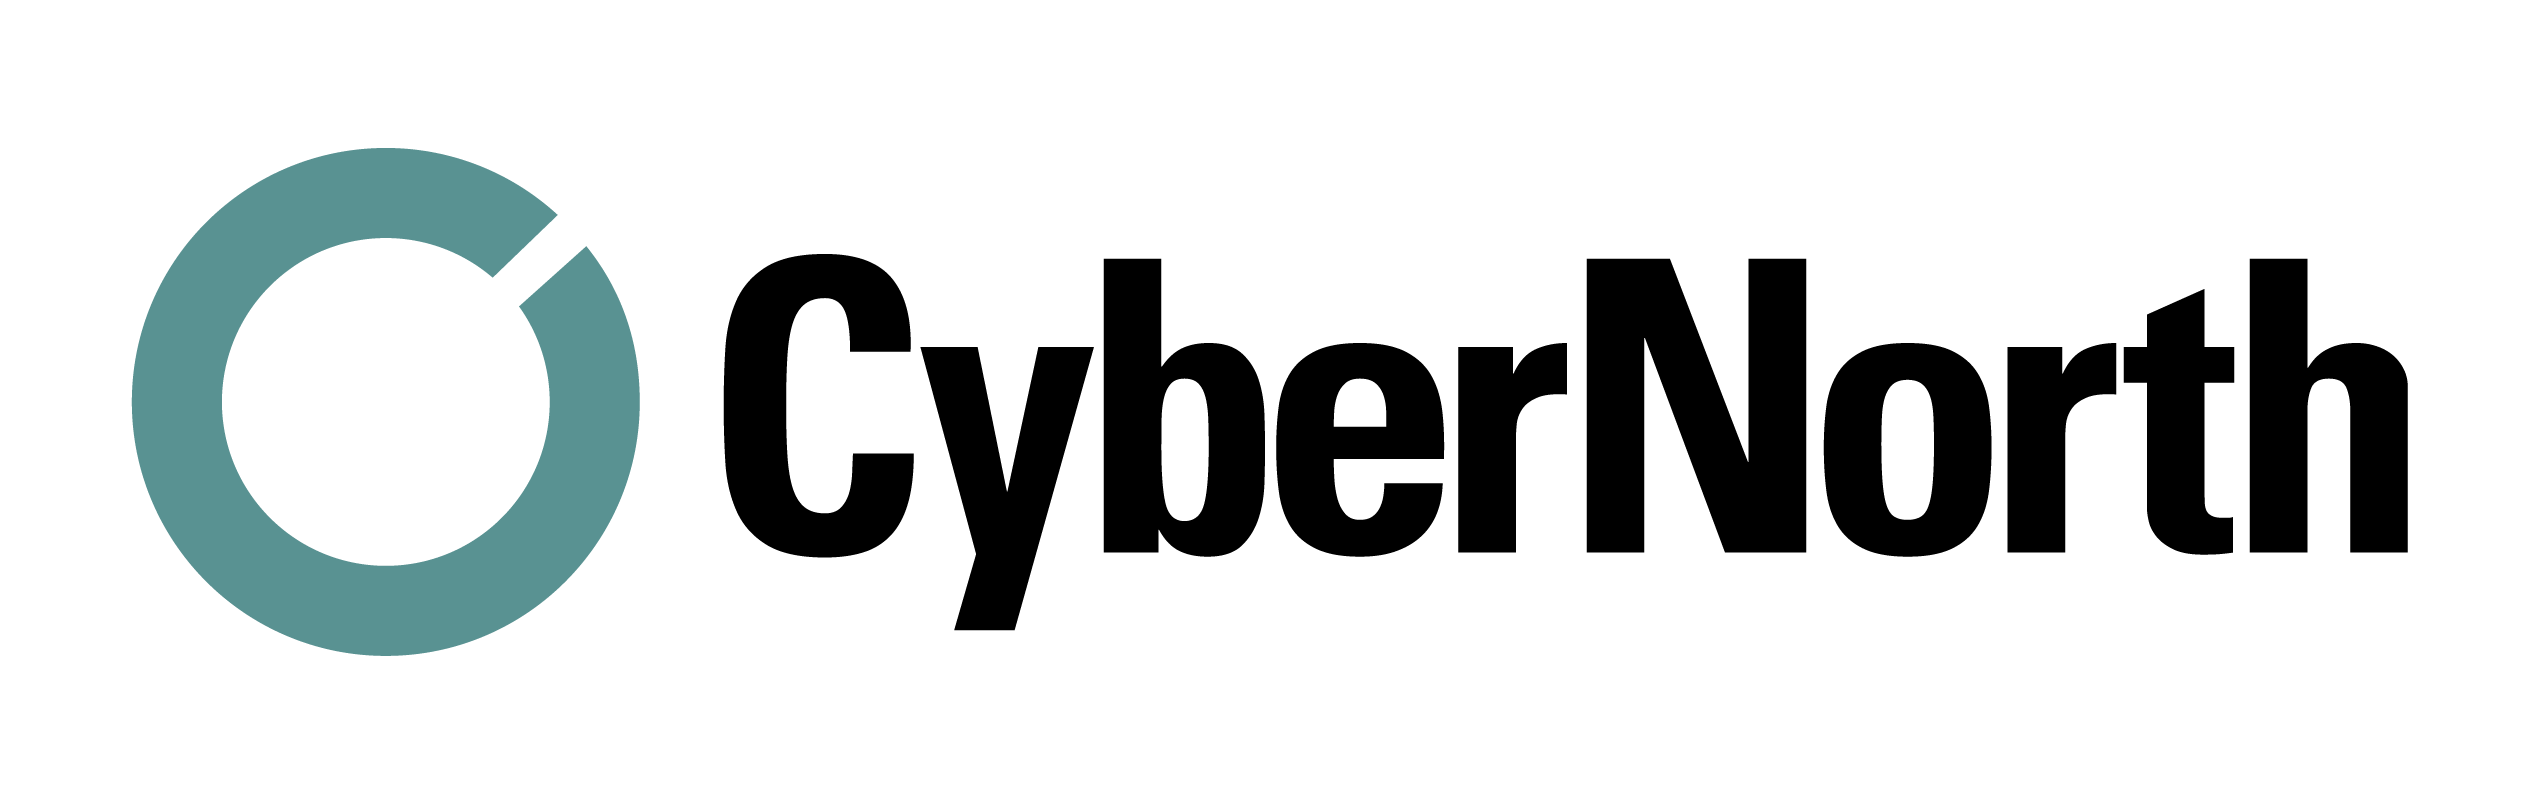 CyberNorth logo